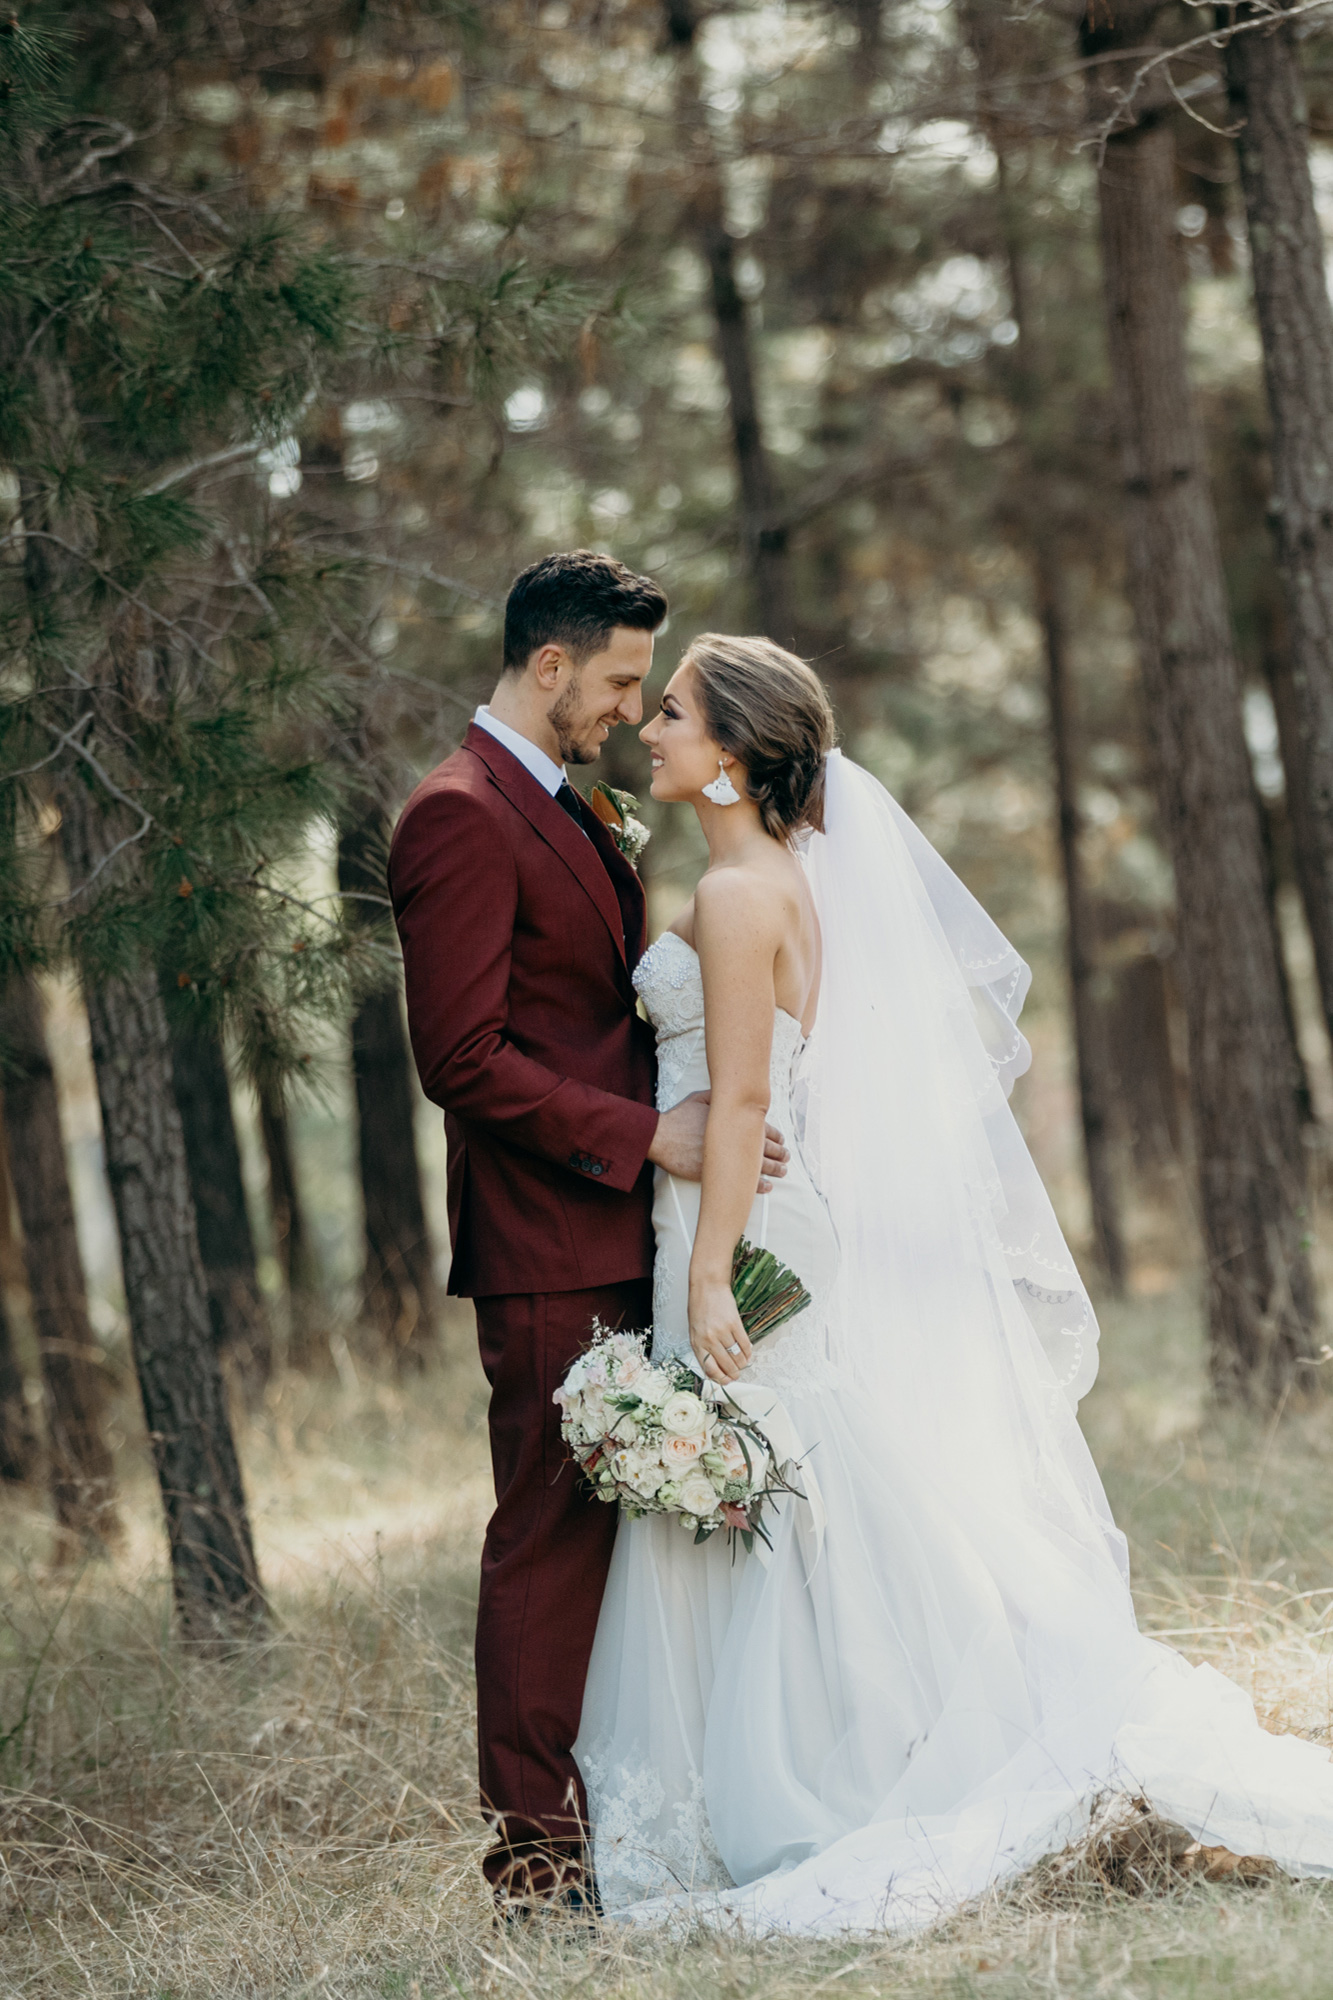 Kristina_Adam_Lavish-Croatian-Wedding_T-One-Image_SBS_014